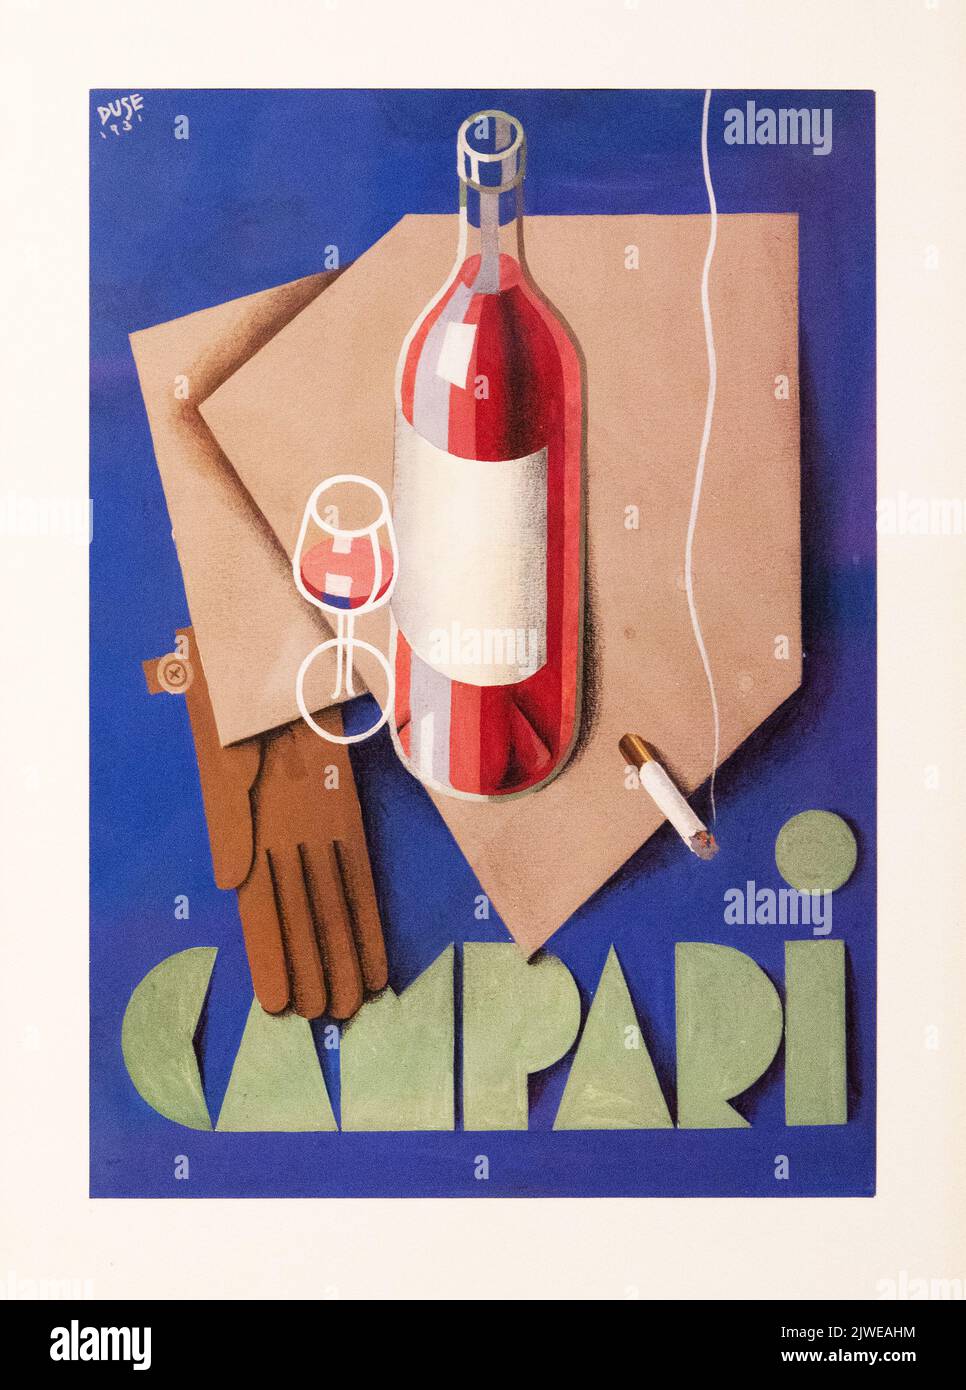 Old illustration advertising Campari drink. Image taken at the Galleria Campari close to Milan. Stock Photo